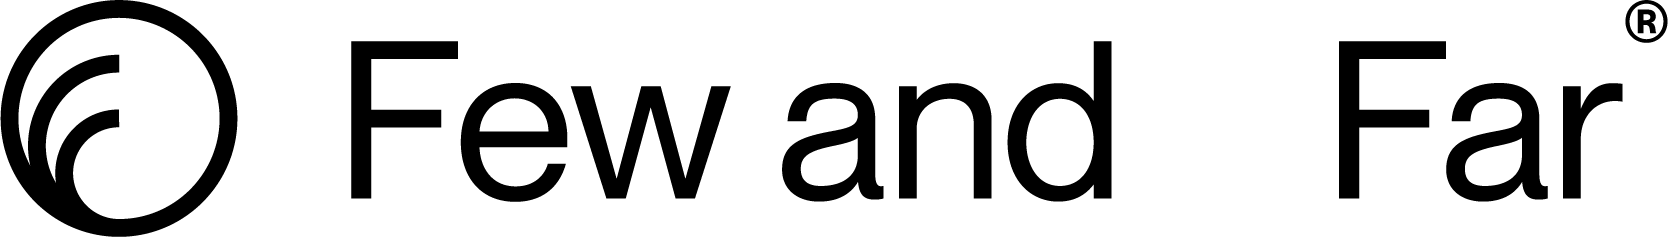 logo-black-01.png